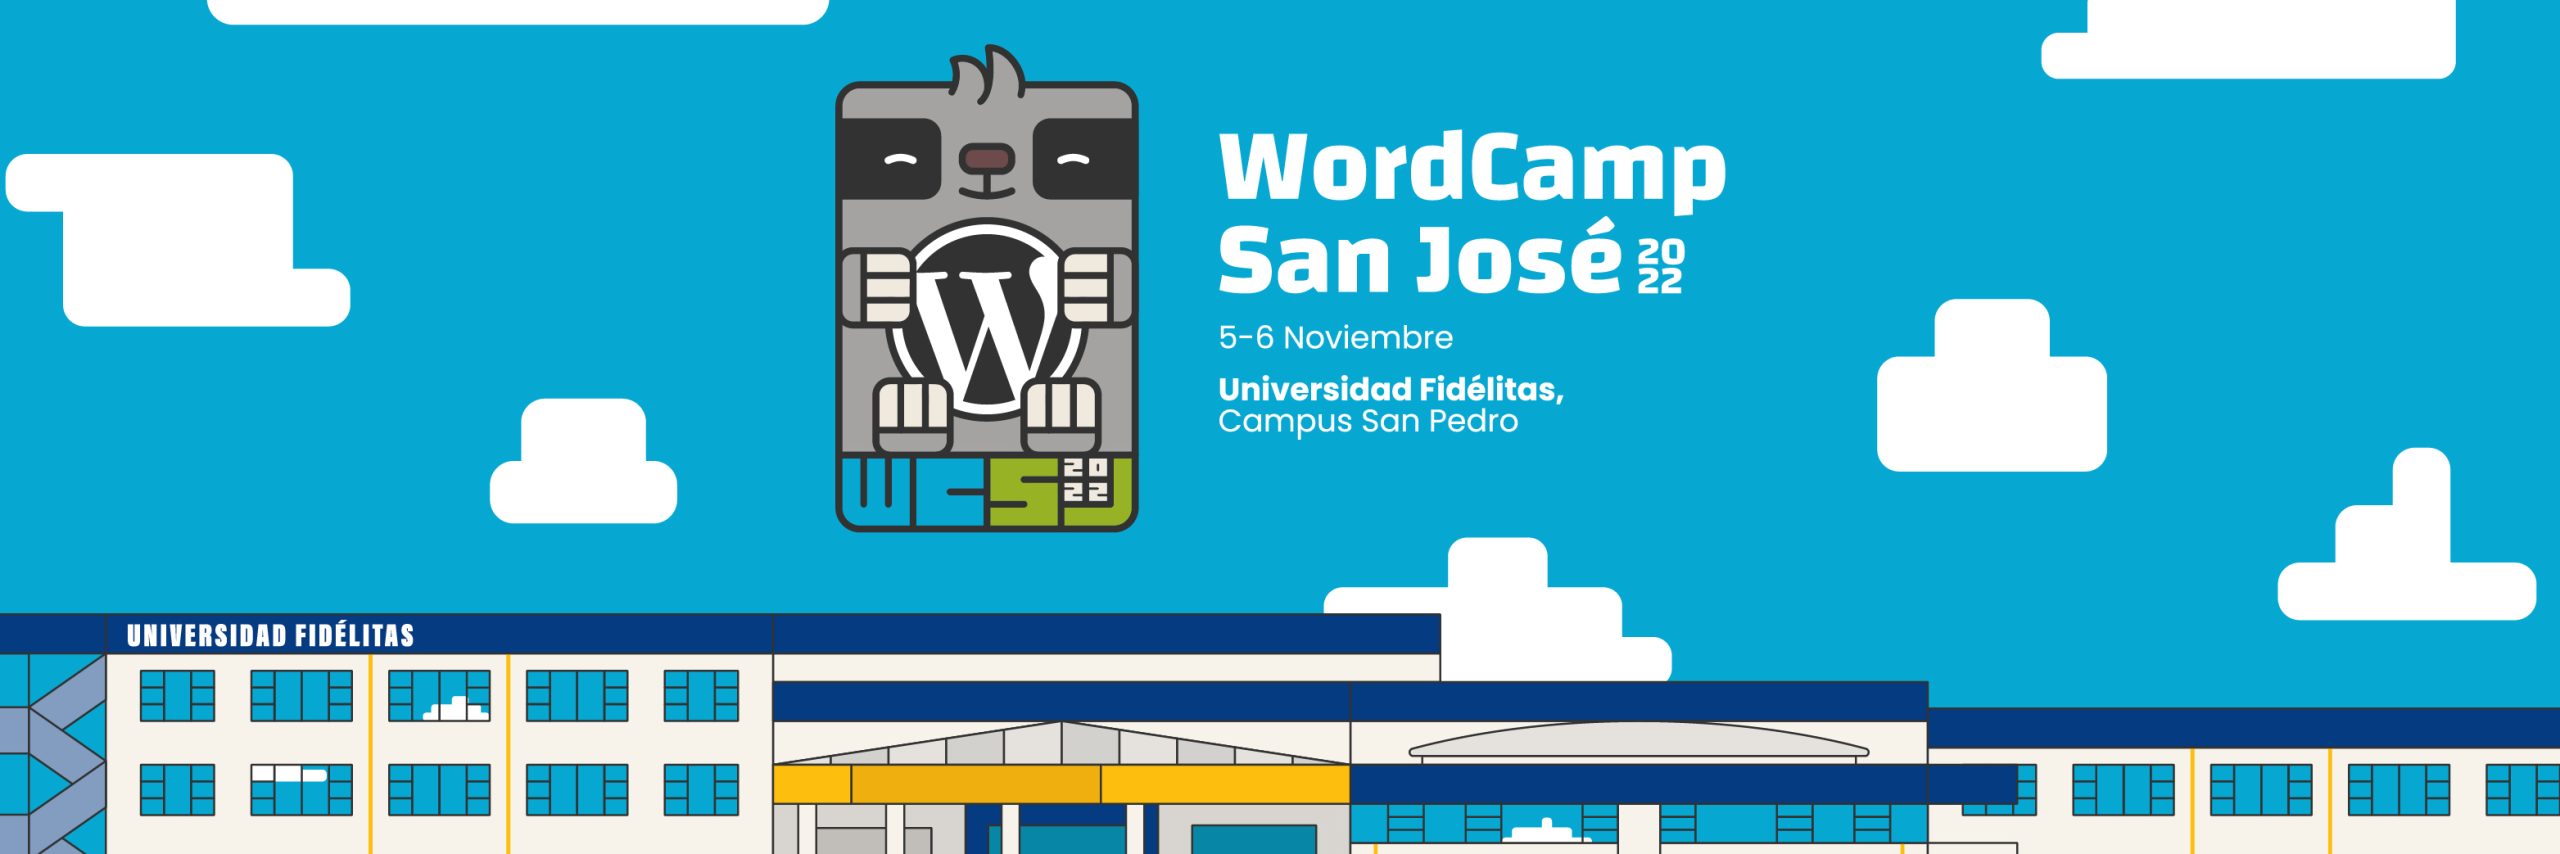 7 razones para venir a este WordCamp San José 2022 si eres emprendedor